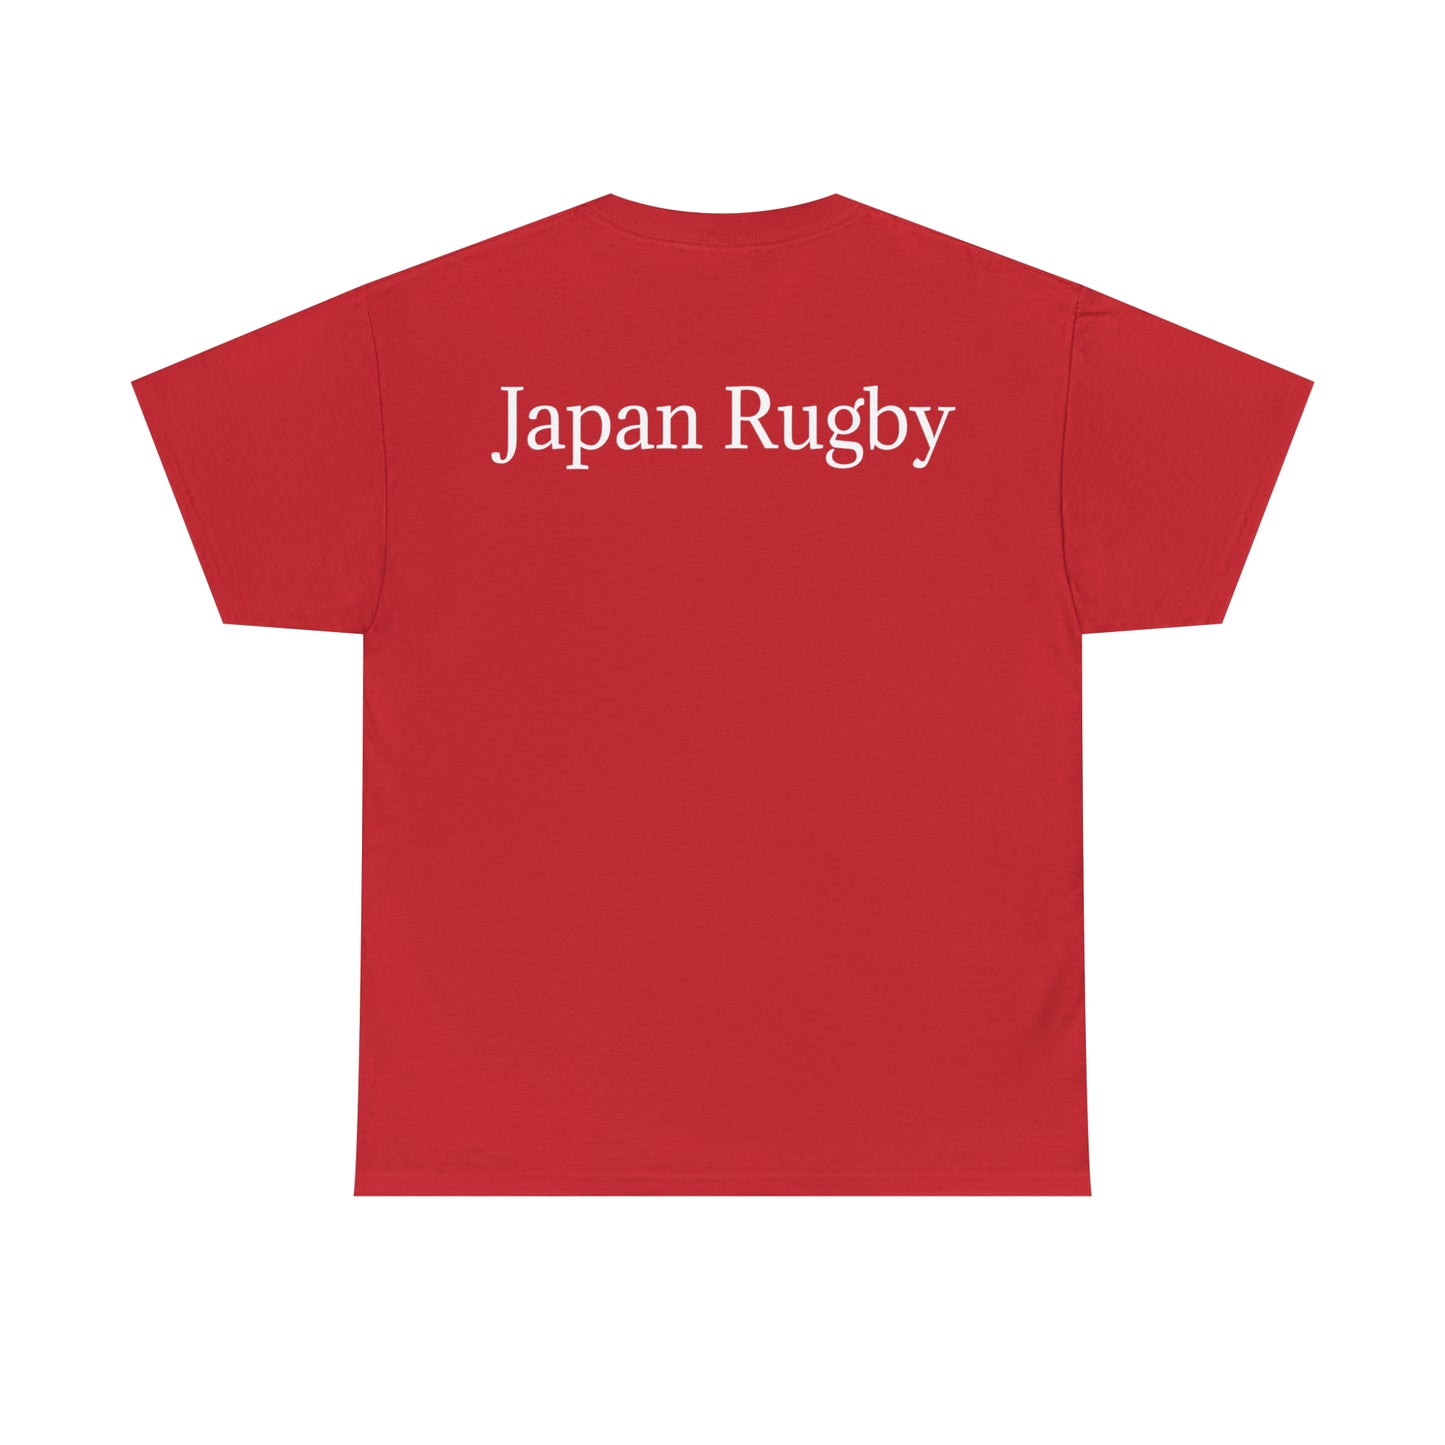 Japan lifting RWC - dark shirts